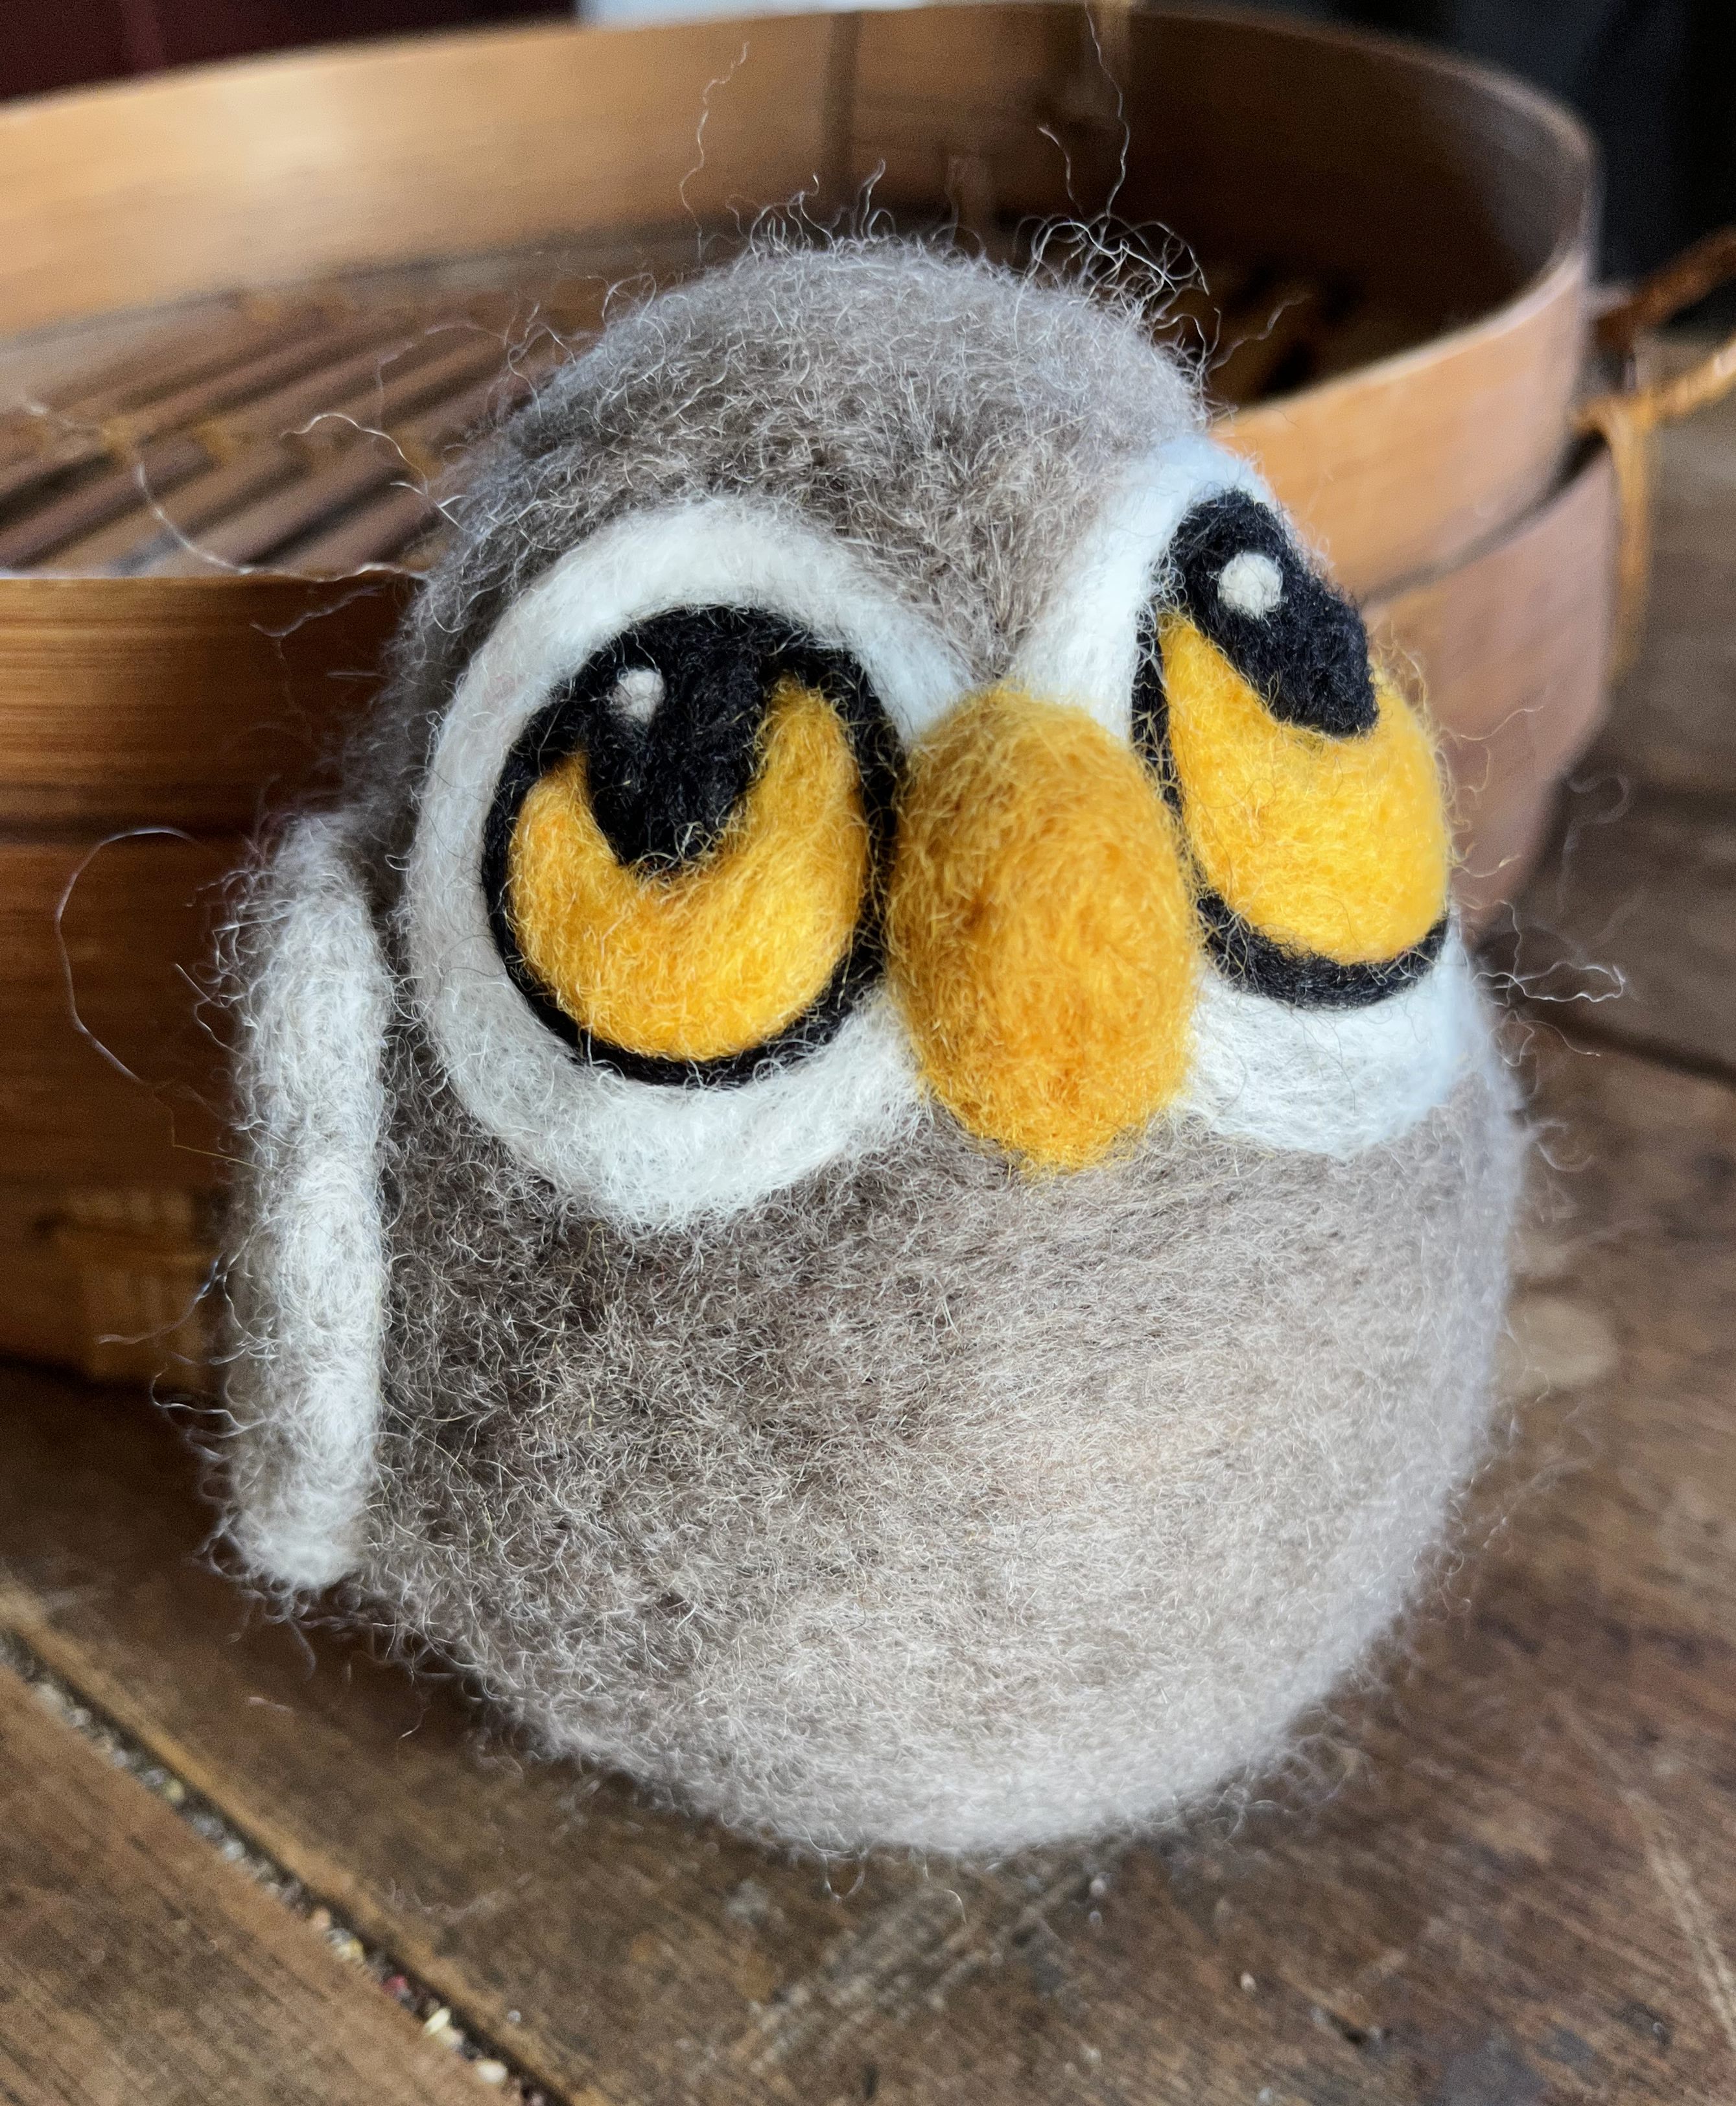 Ashford Needle Felting Kit - Owl